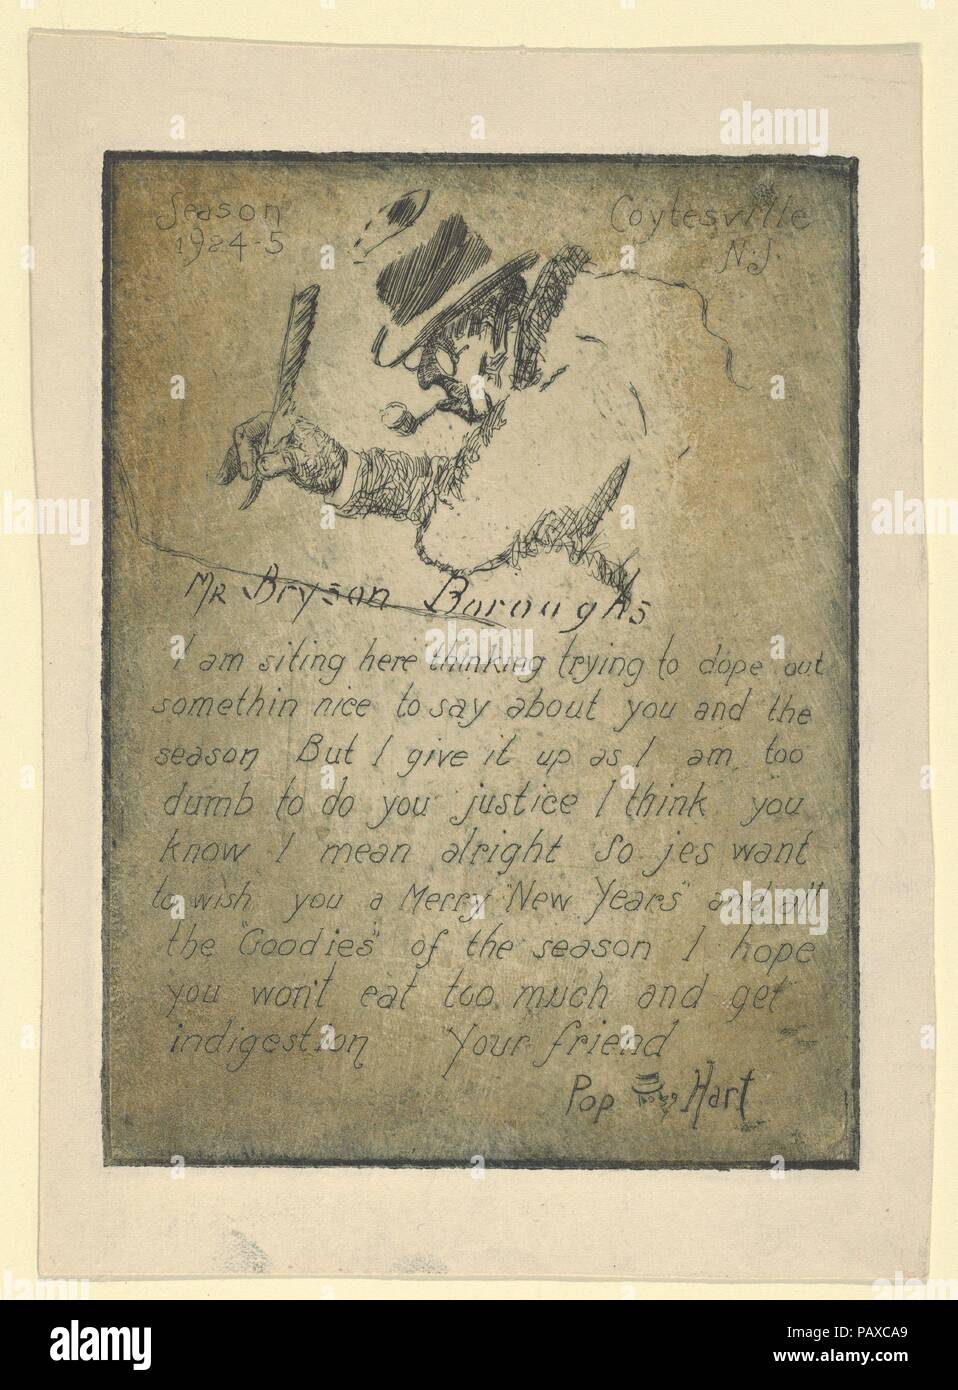 'Season's Greetings,' 1924-1925, addressed to Mr. Bryson Boroughs. Artist: George Overbury 'Pop' Hart (American, Cairo, Illinois 1868-1933 New York). Dimensions: Plate: 6 in. × 4 1/2 in. (15.2 × 11.4 cm)  Sheet: 7 1/4 × 5 1/4 in. (18.4 × 13.3 cm). Date: 1924. Museum: Metropolitan Museum of Art, New York, USA. Stock Photo